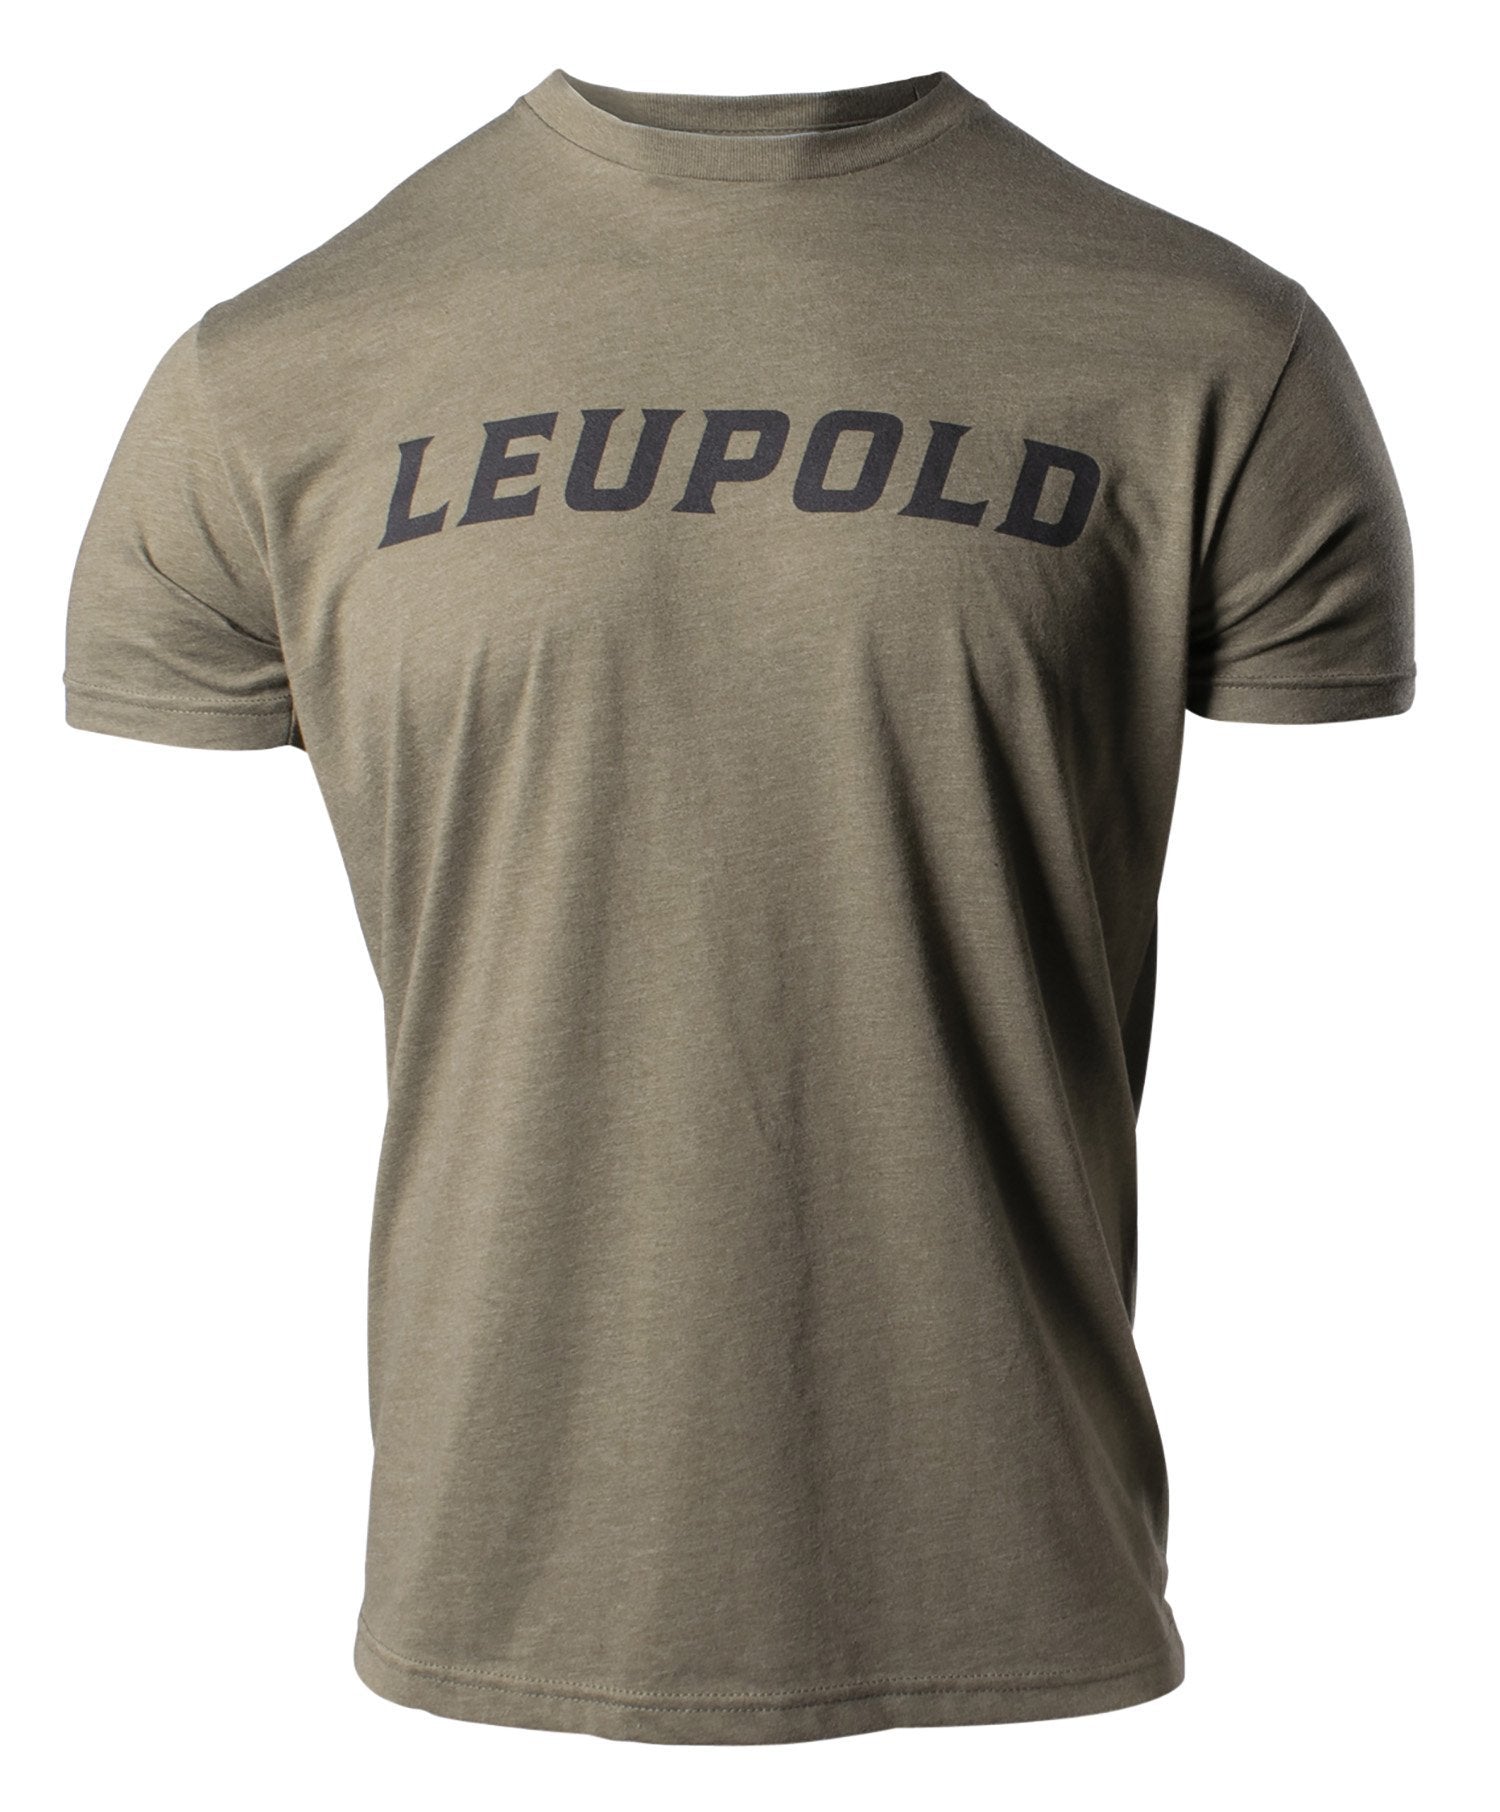 Leupold 180235 Wordmark T-Shirt Military Green Large Short Sleeve - Pacific Flyway Supplies